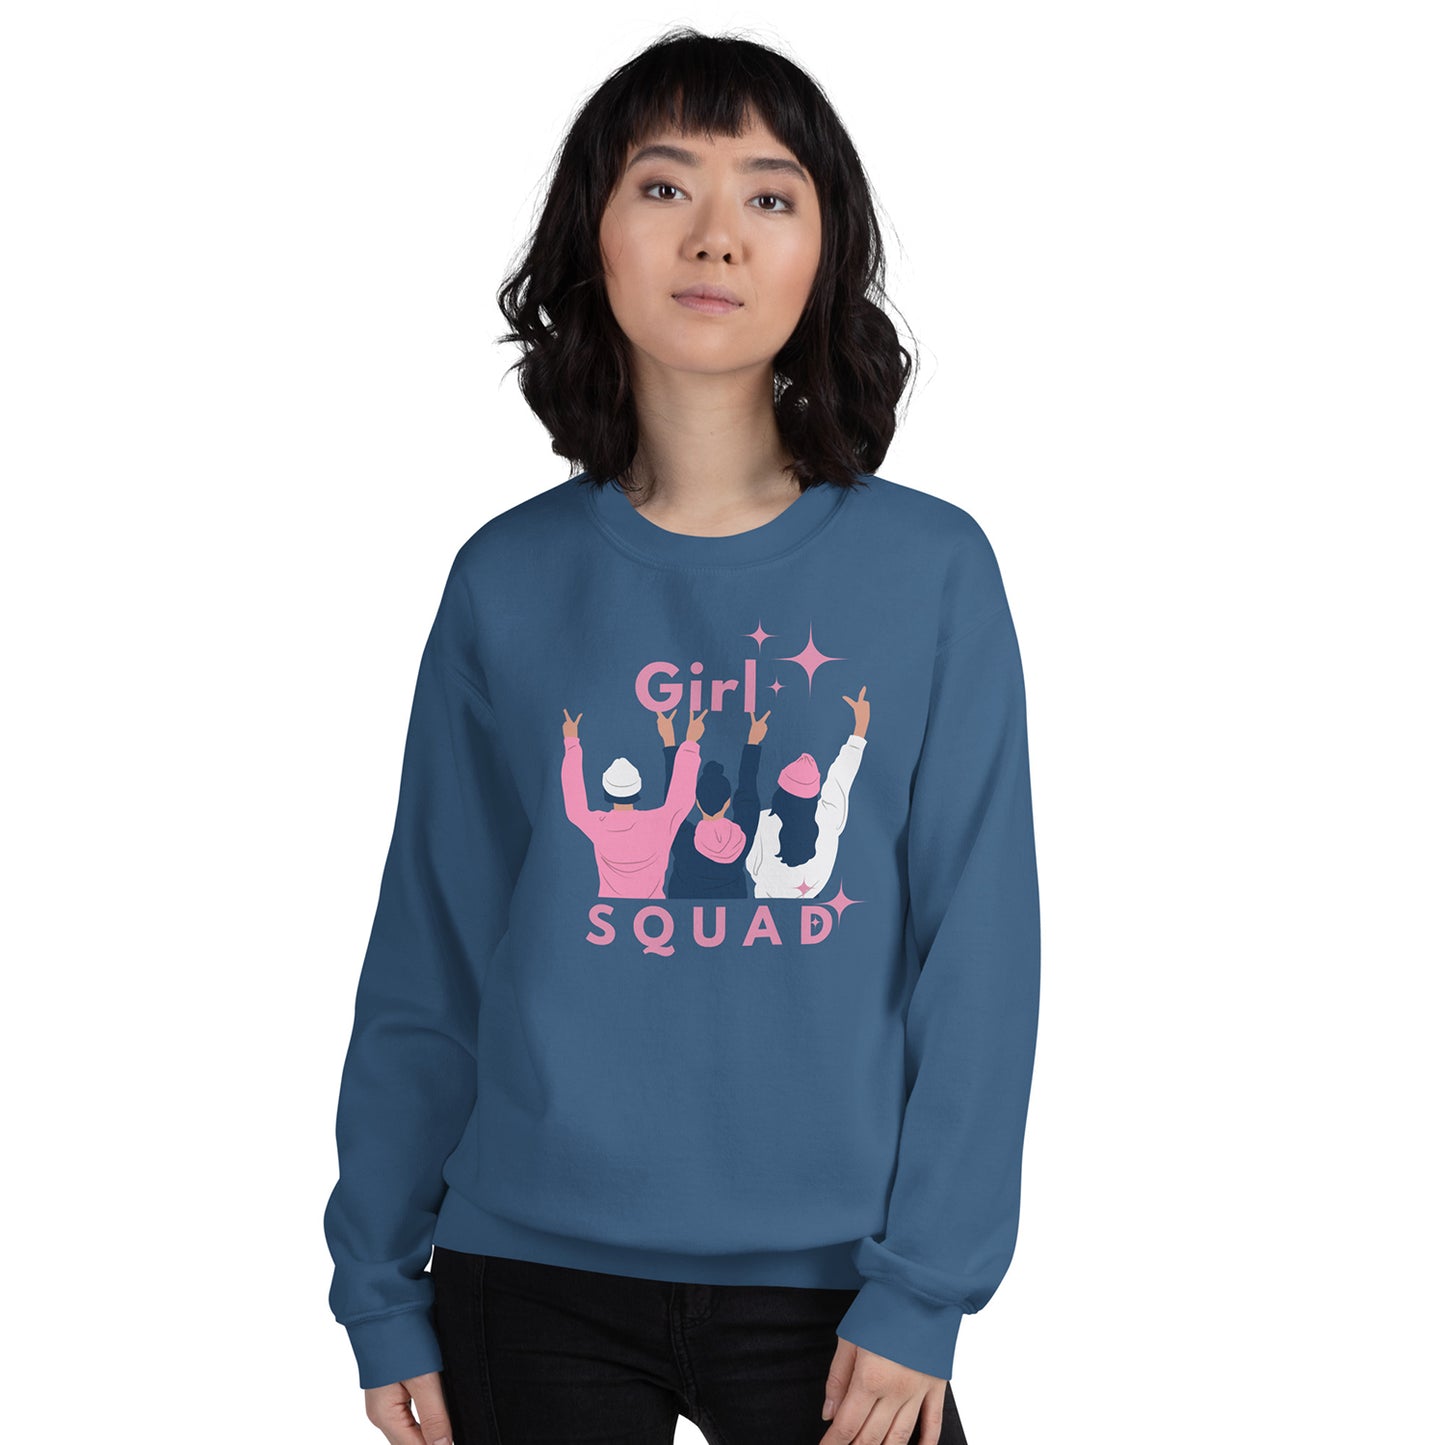 Girls Group Wear Comfy Sweatshirt